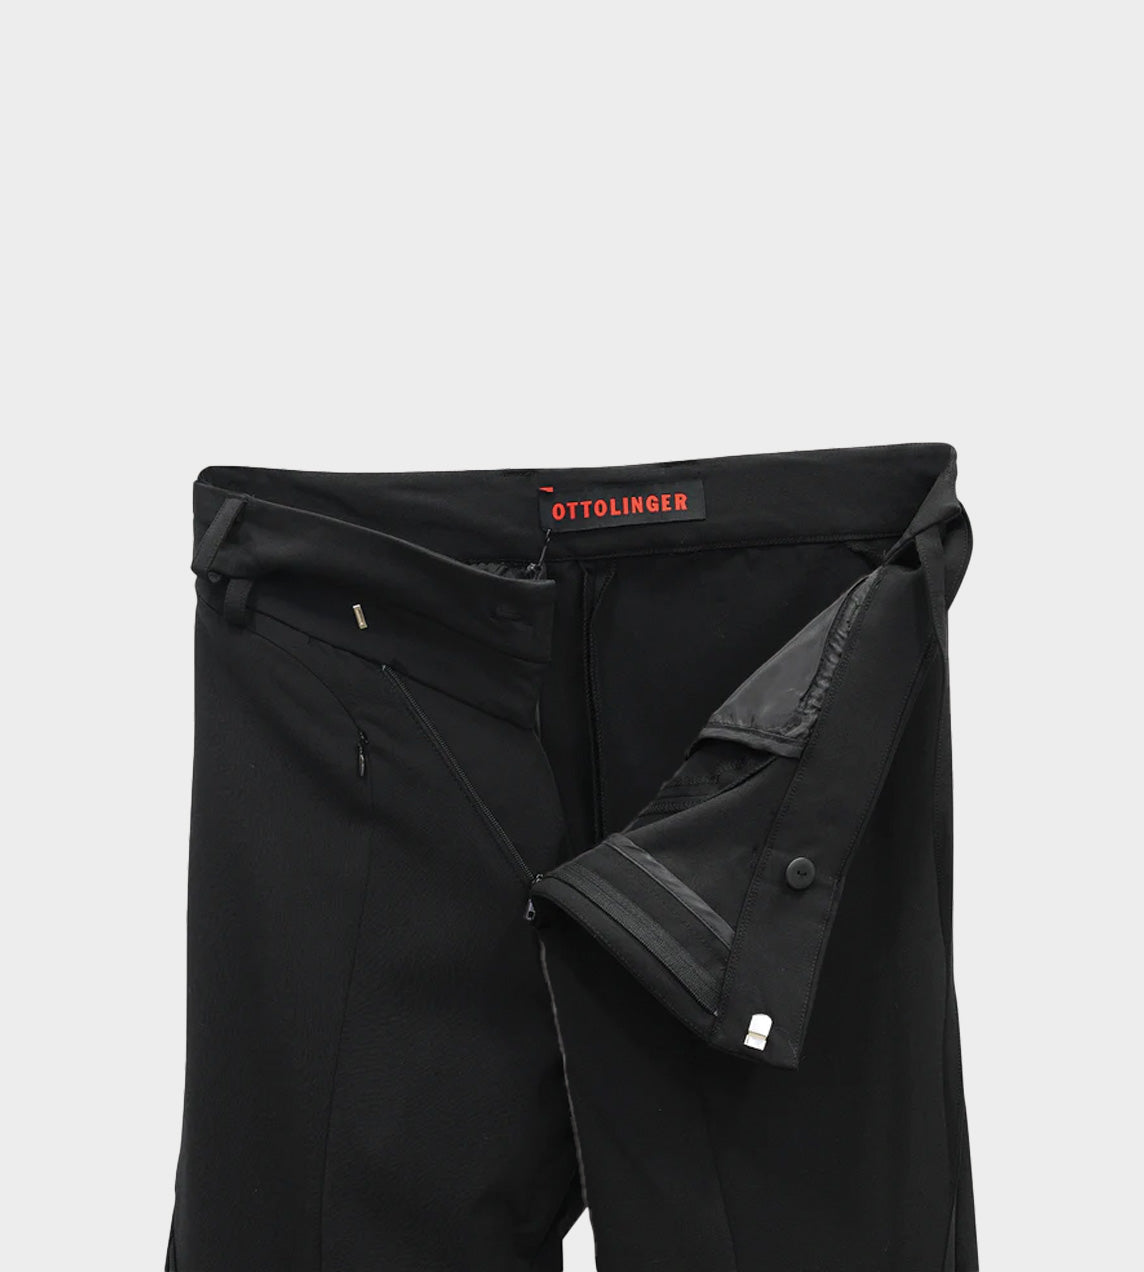 Ottolinger - Fitted Contrast Suit Pants Black